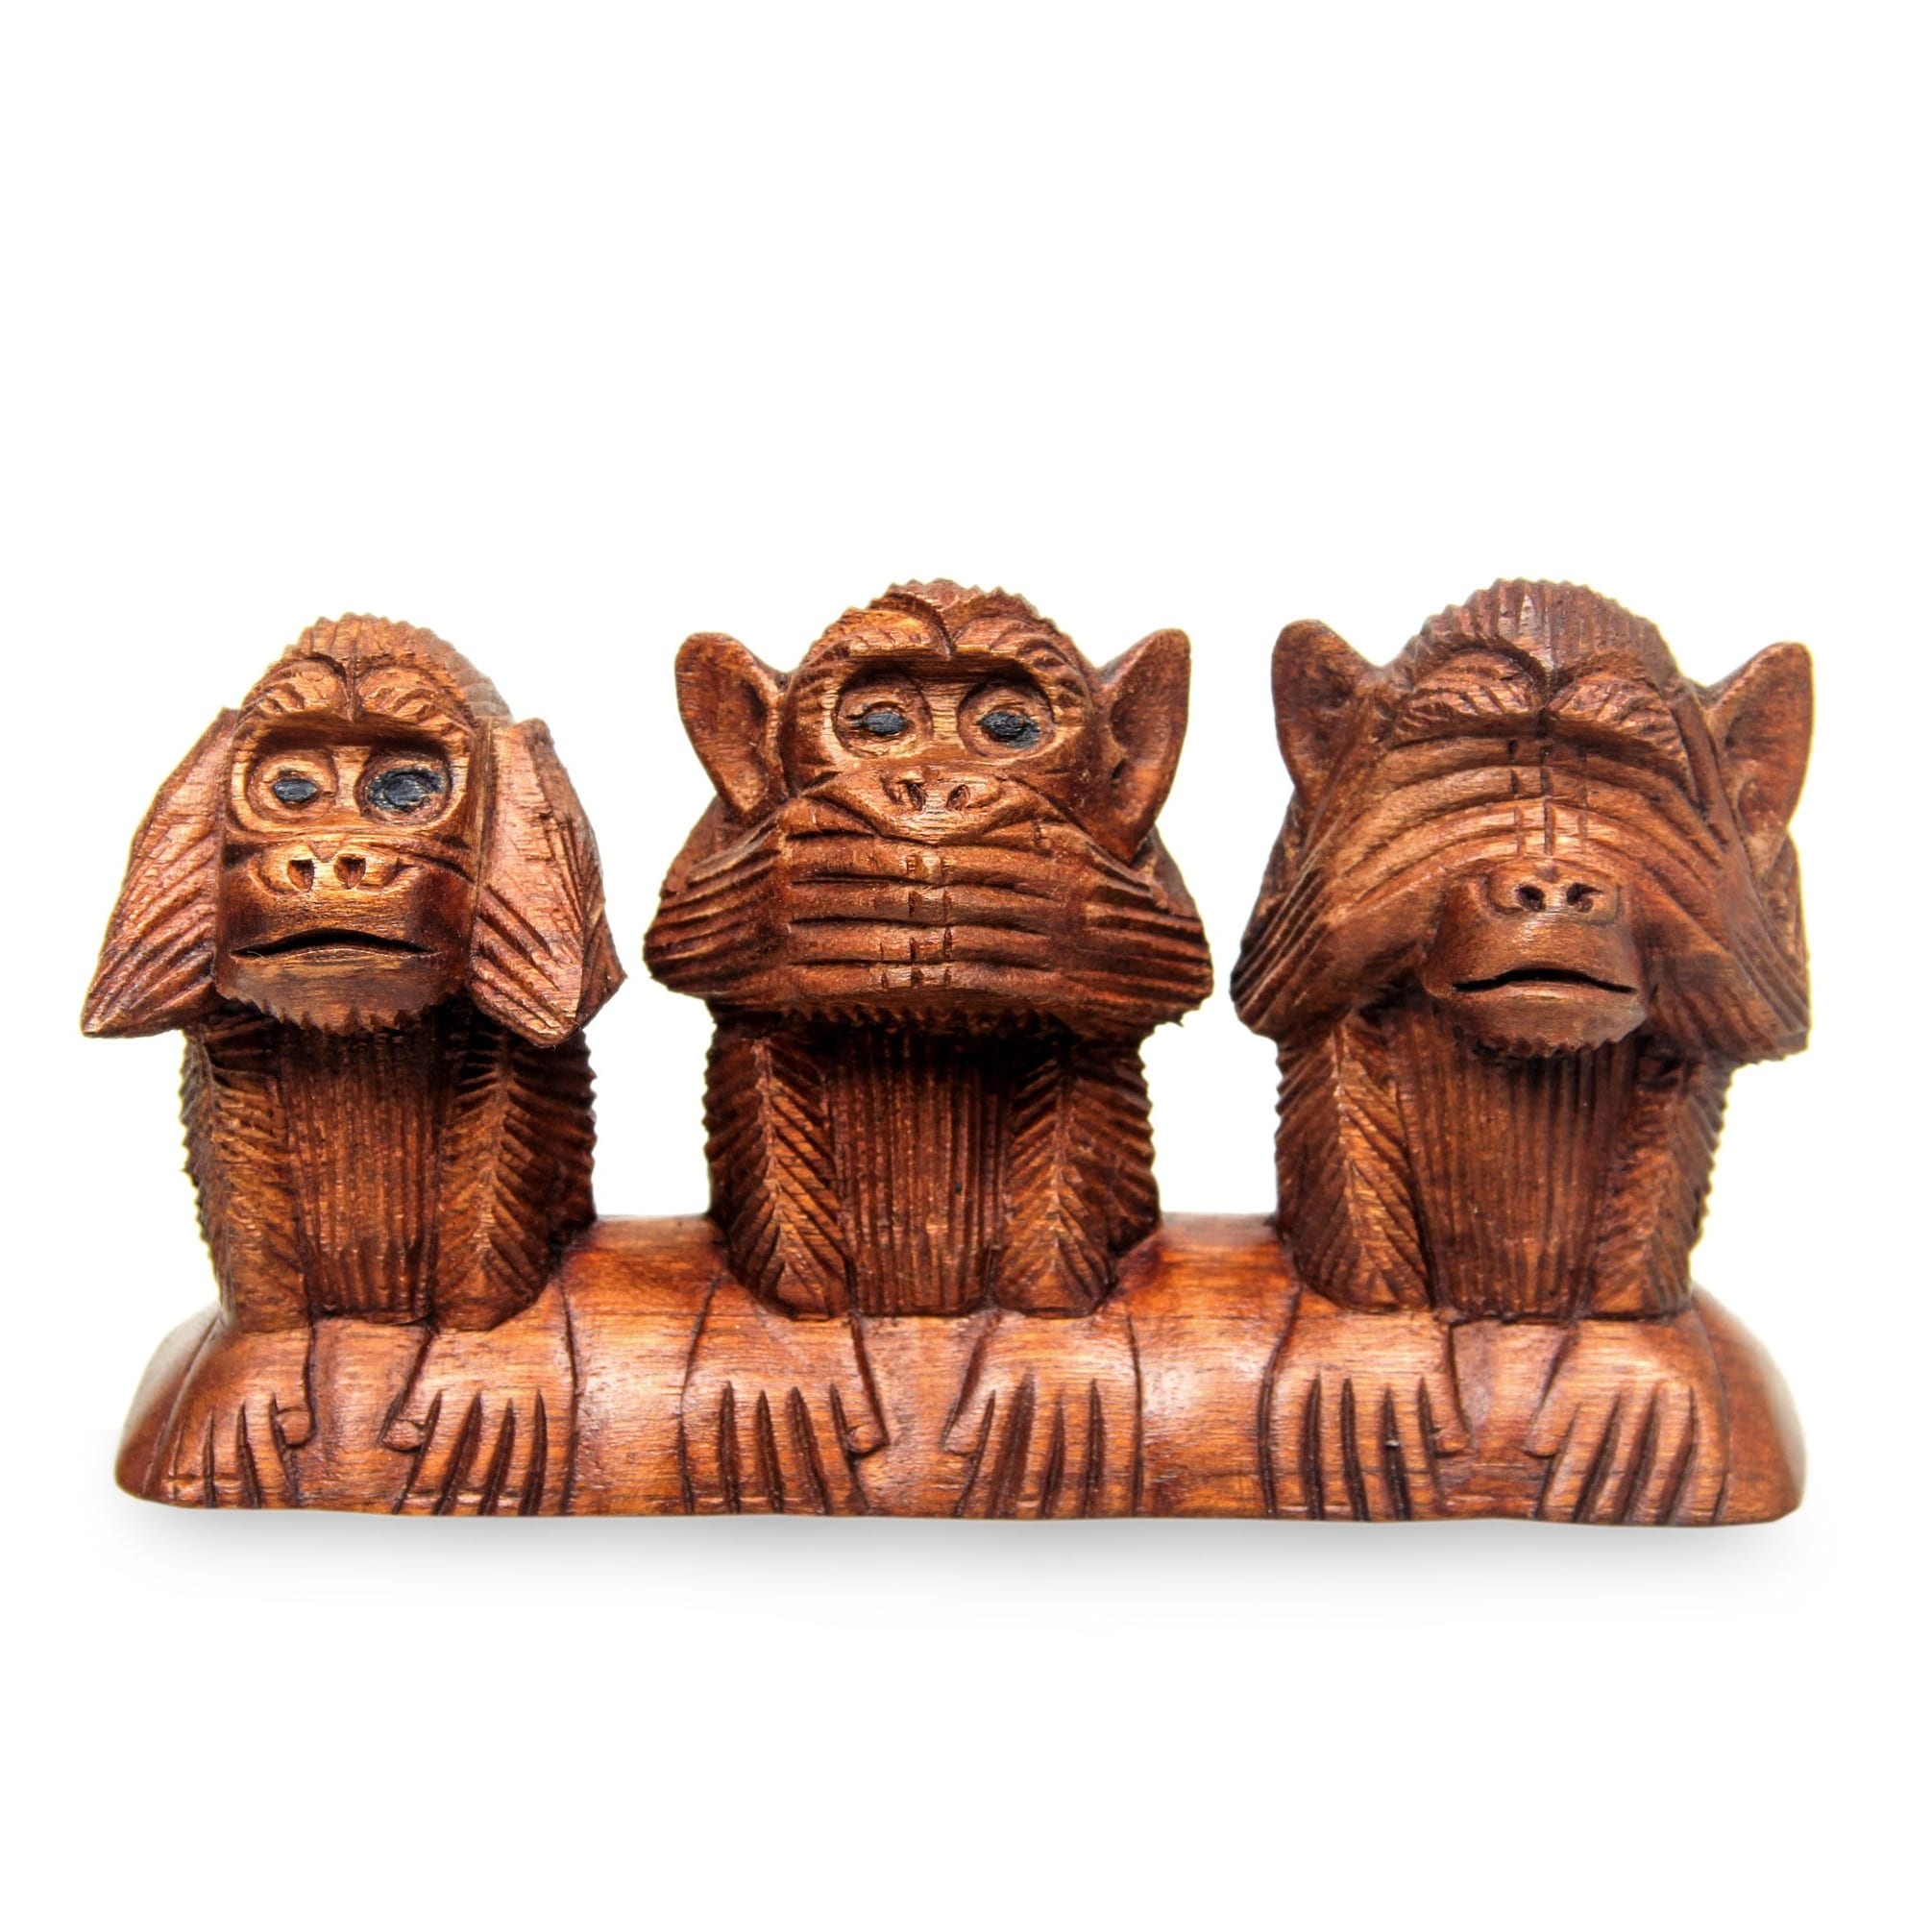 Three Wise Monkeys Hear Speak See No Evil Artisan Decorator Accent Brown Wood Traditonal Signed Art Work Sculpture Overstock